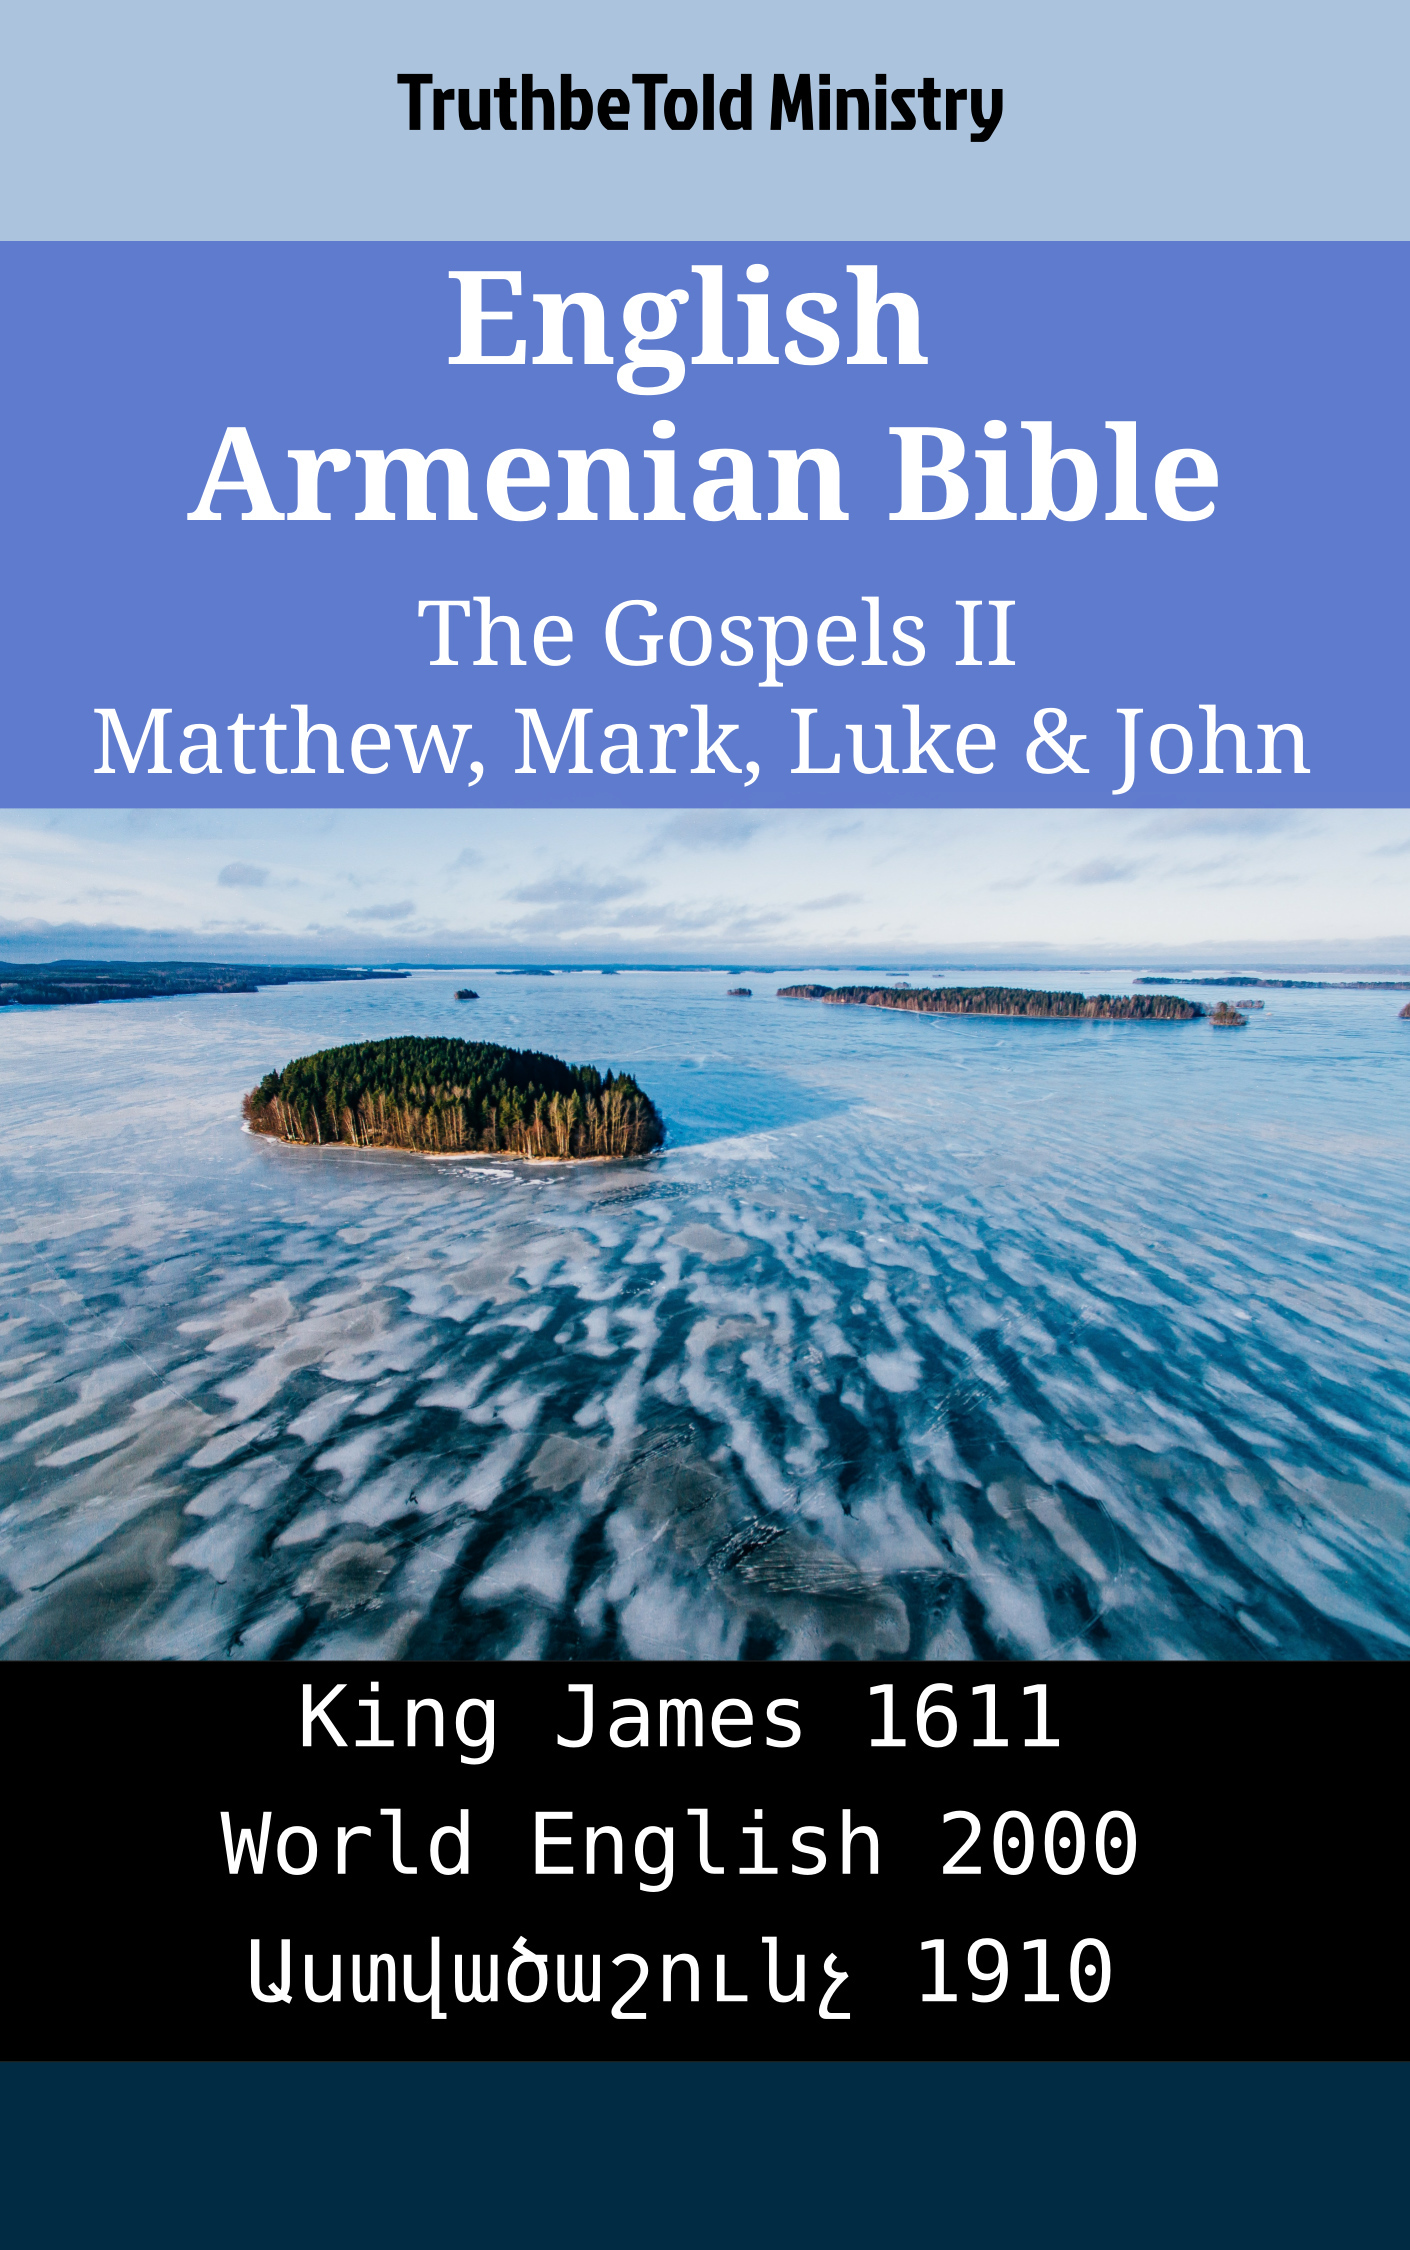 English Armenian Bible - The Gospels II - Matthew, Mark, Luke & John